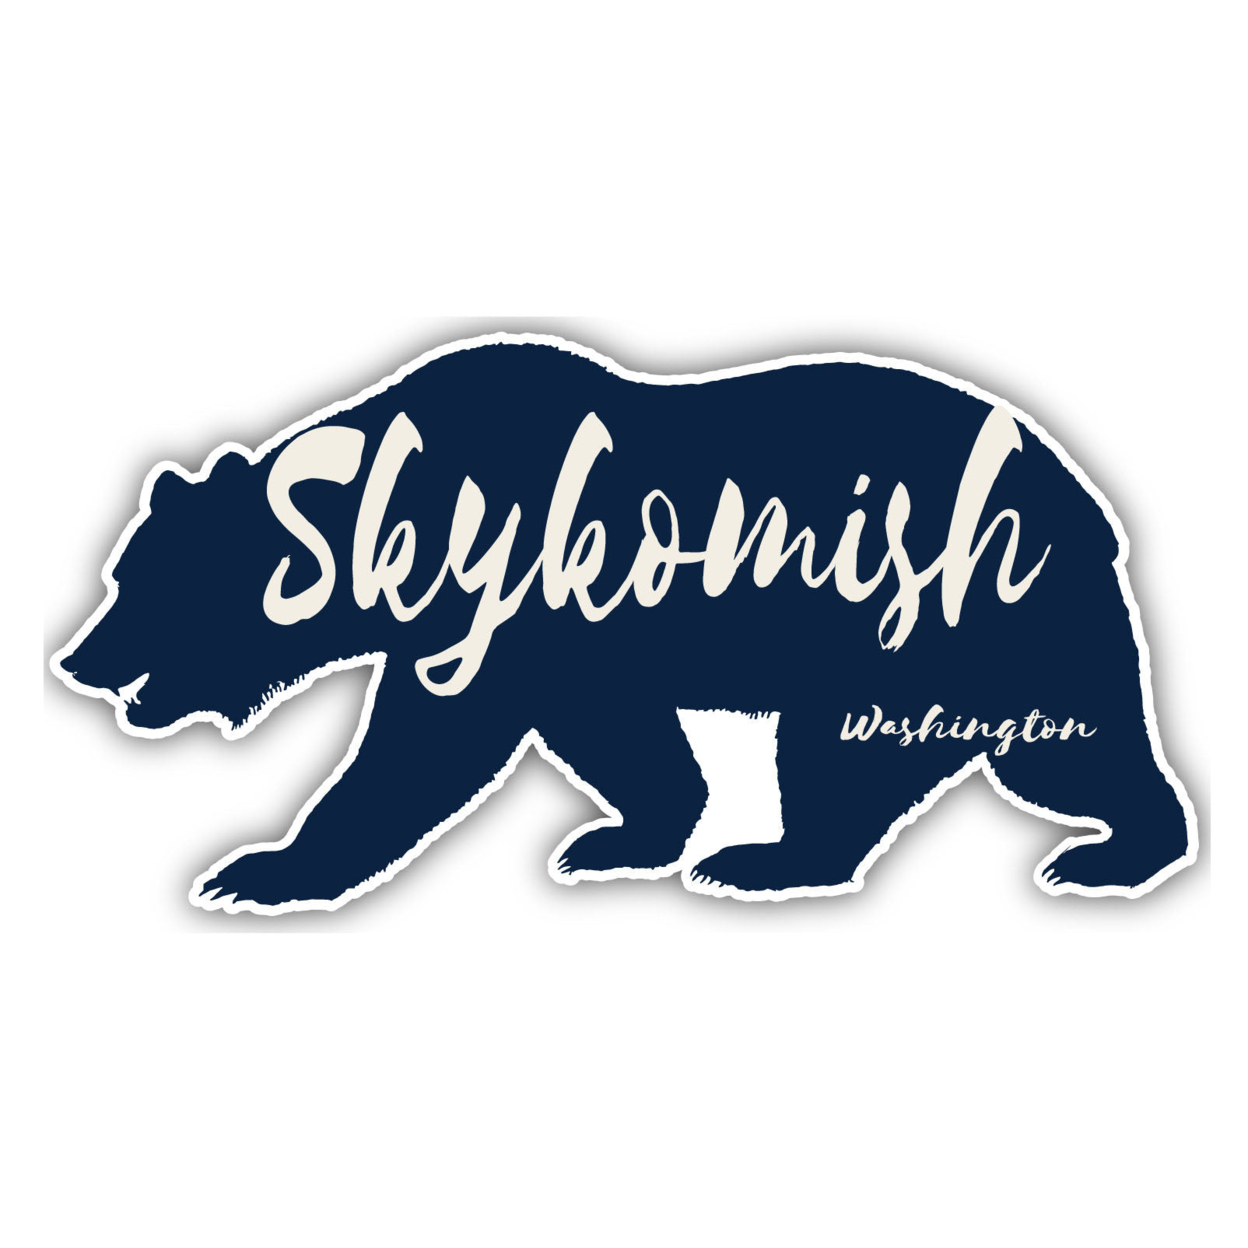 Skykomish Washington Souvenir Decorative Stickers (Choose Theme And Size) - Single Unit, 2-Inch, Bear